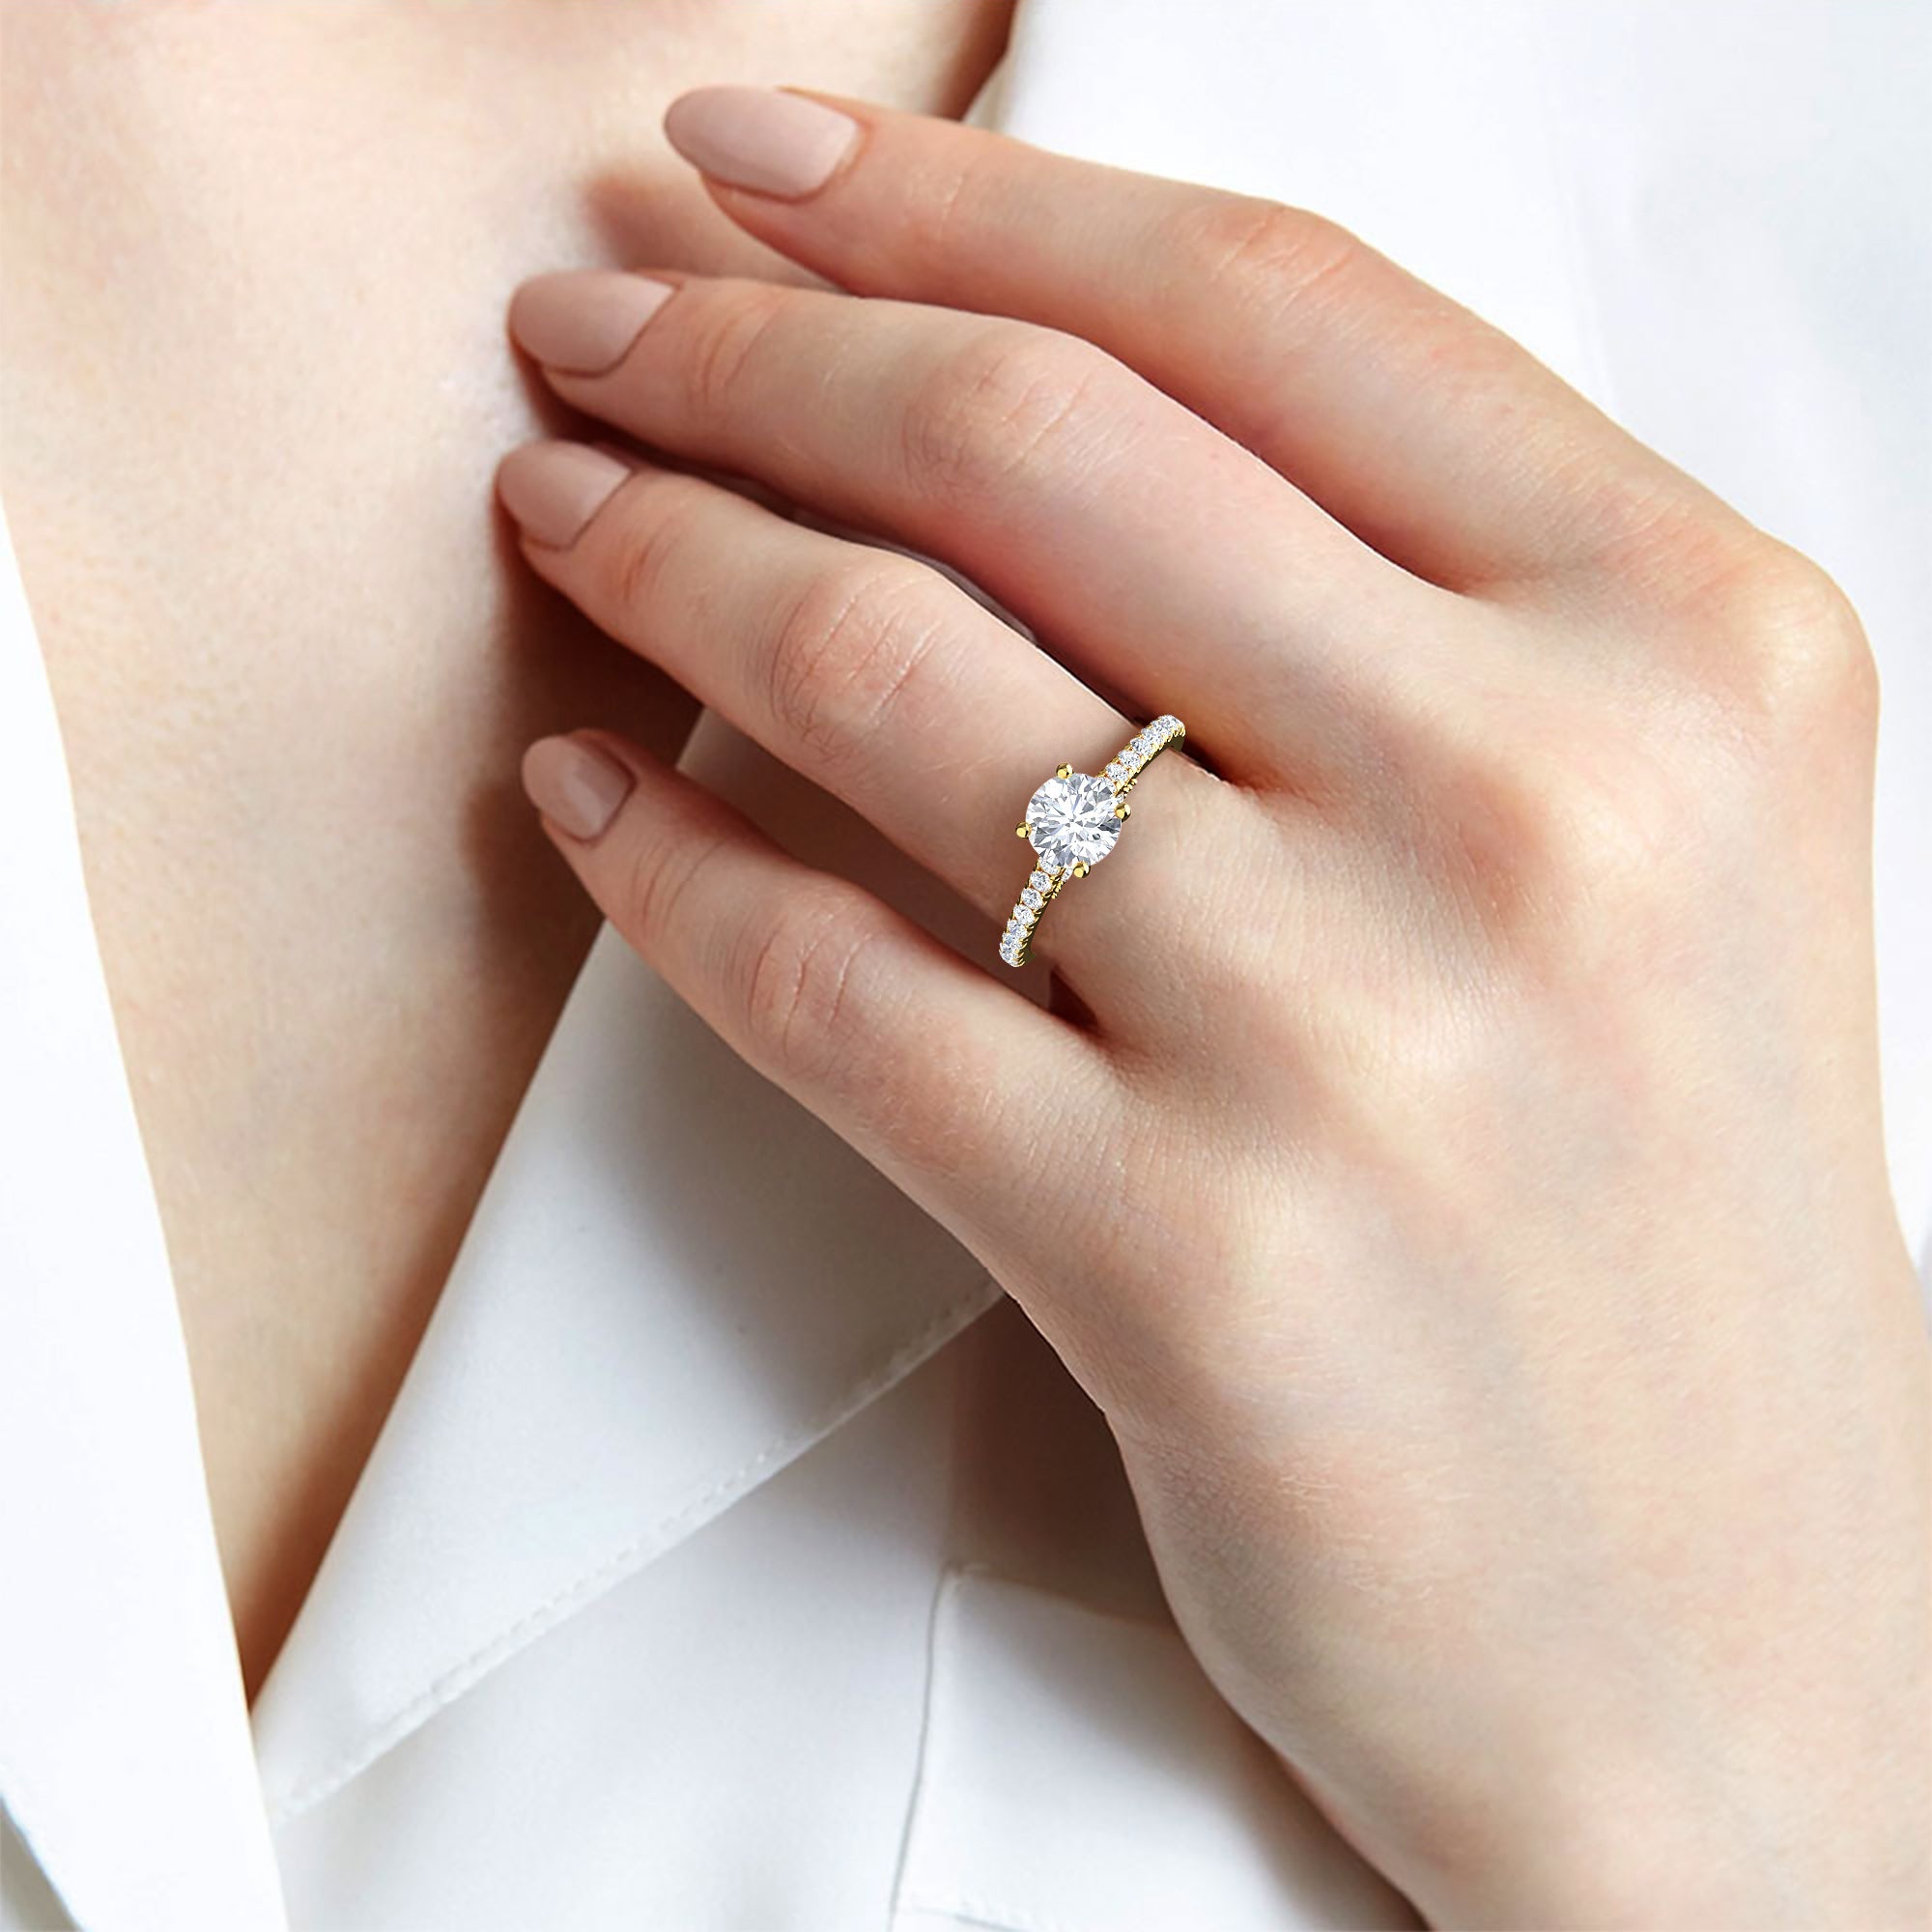 1 Carat Round Brilliant Diamond - Natural Diamond Engagement Ring